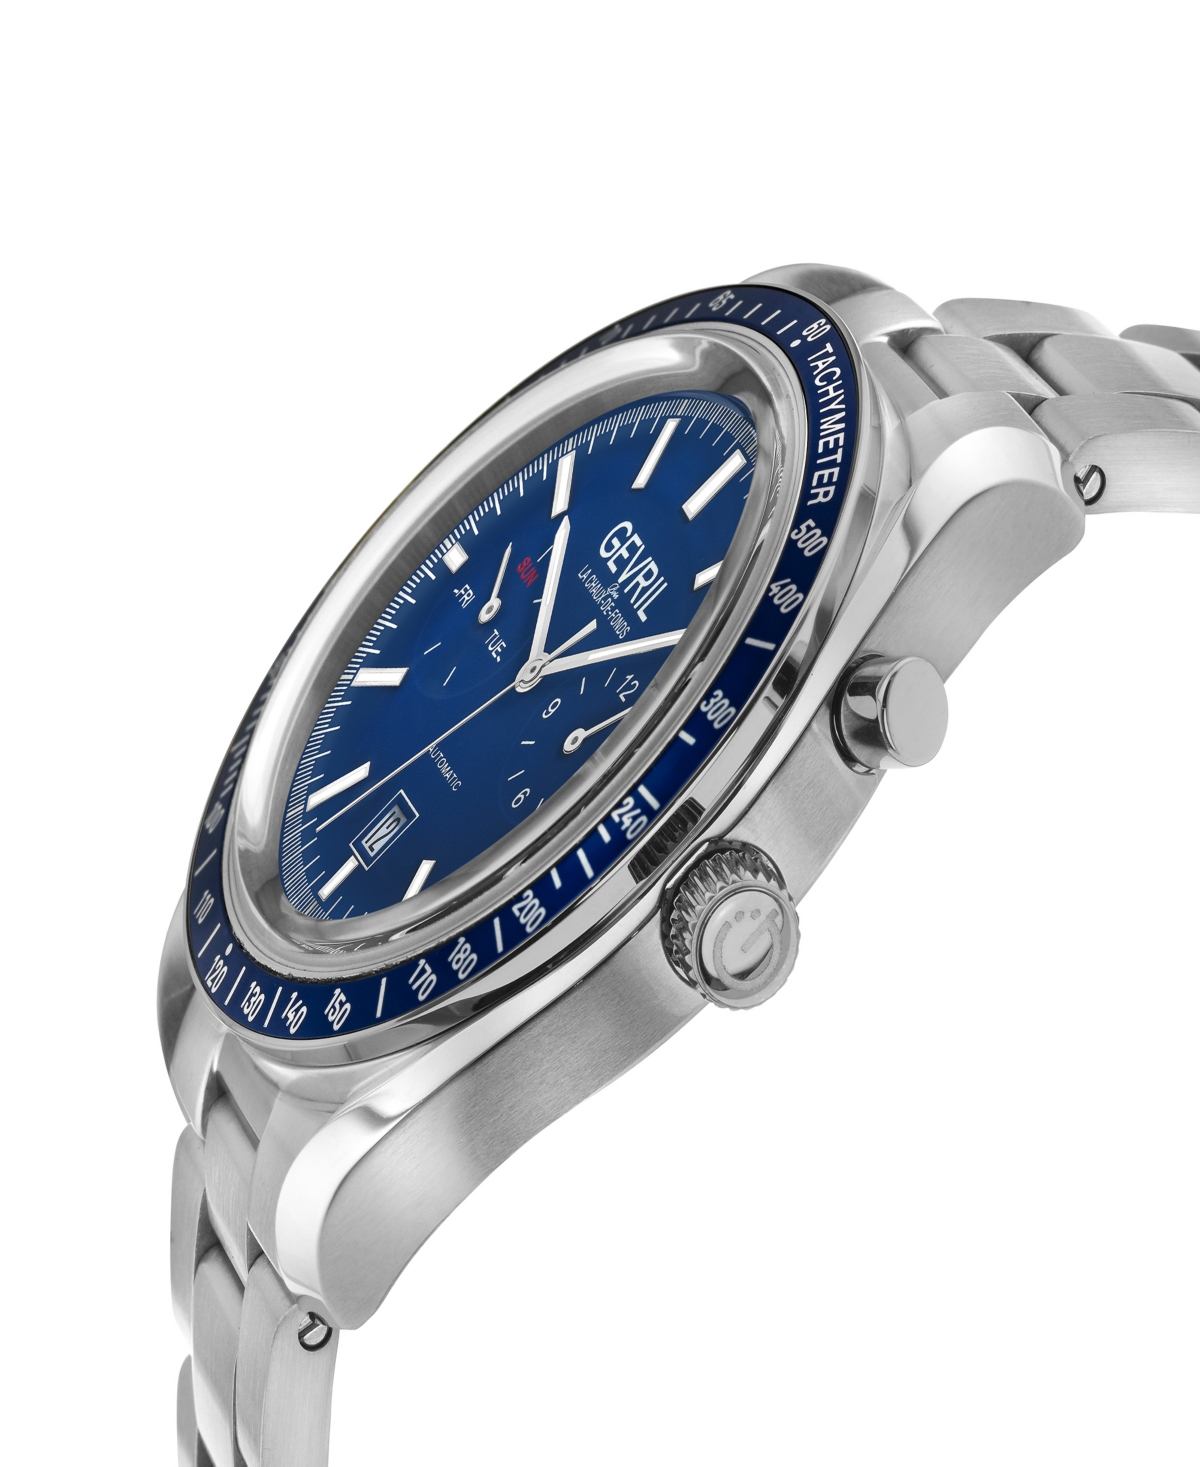 Shop Gevril Men's Lenox Silver-tone Stainless Steel Watch 44mm